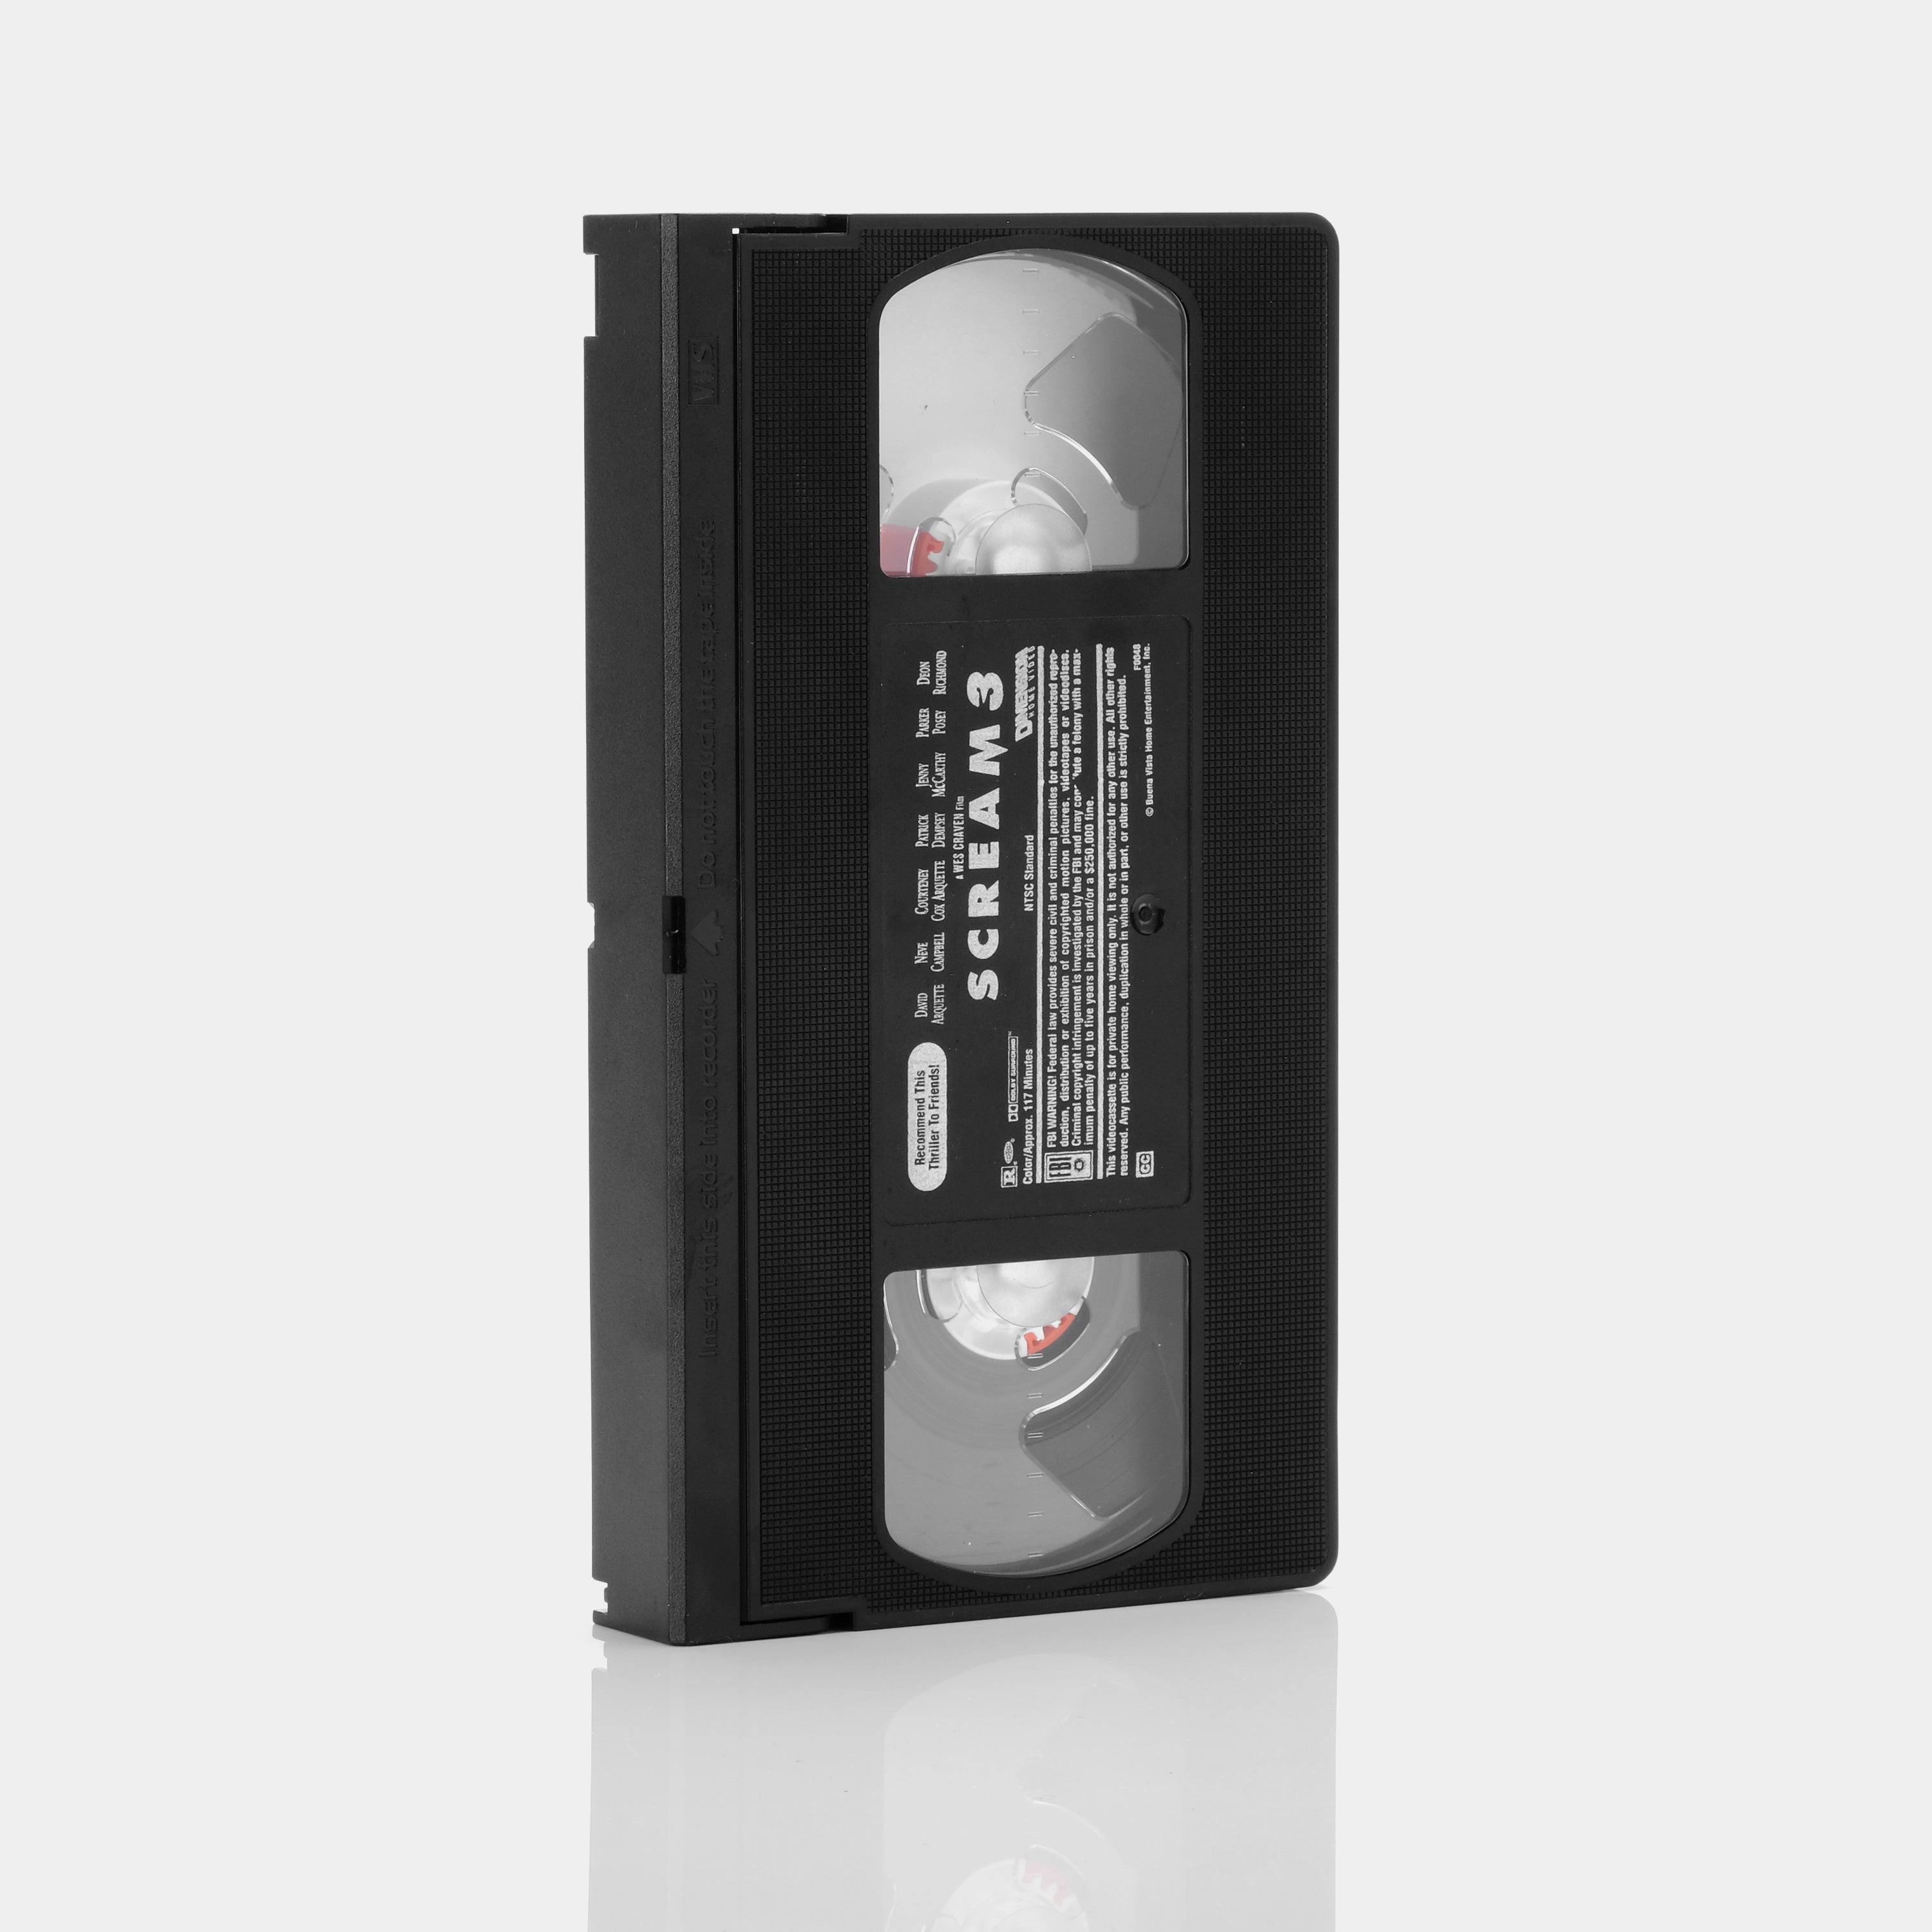 Scream 3 VHS Tape